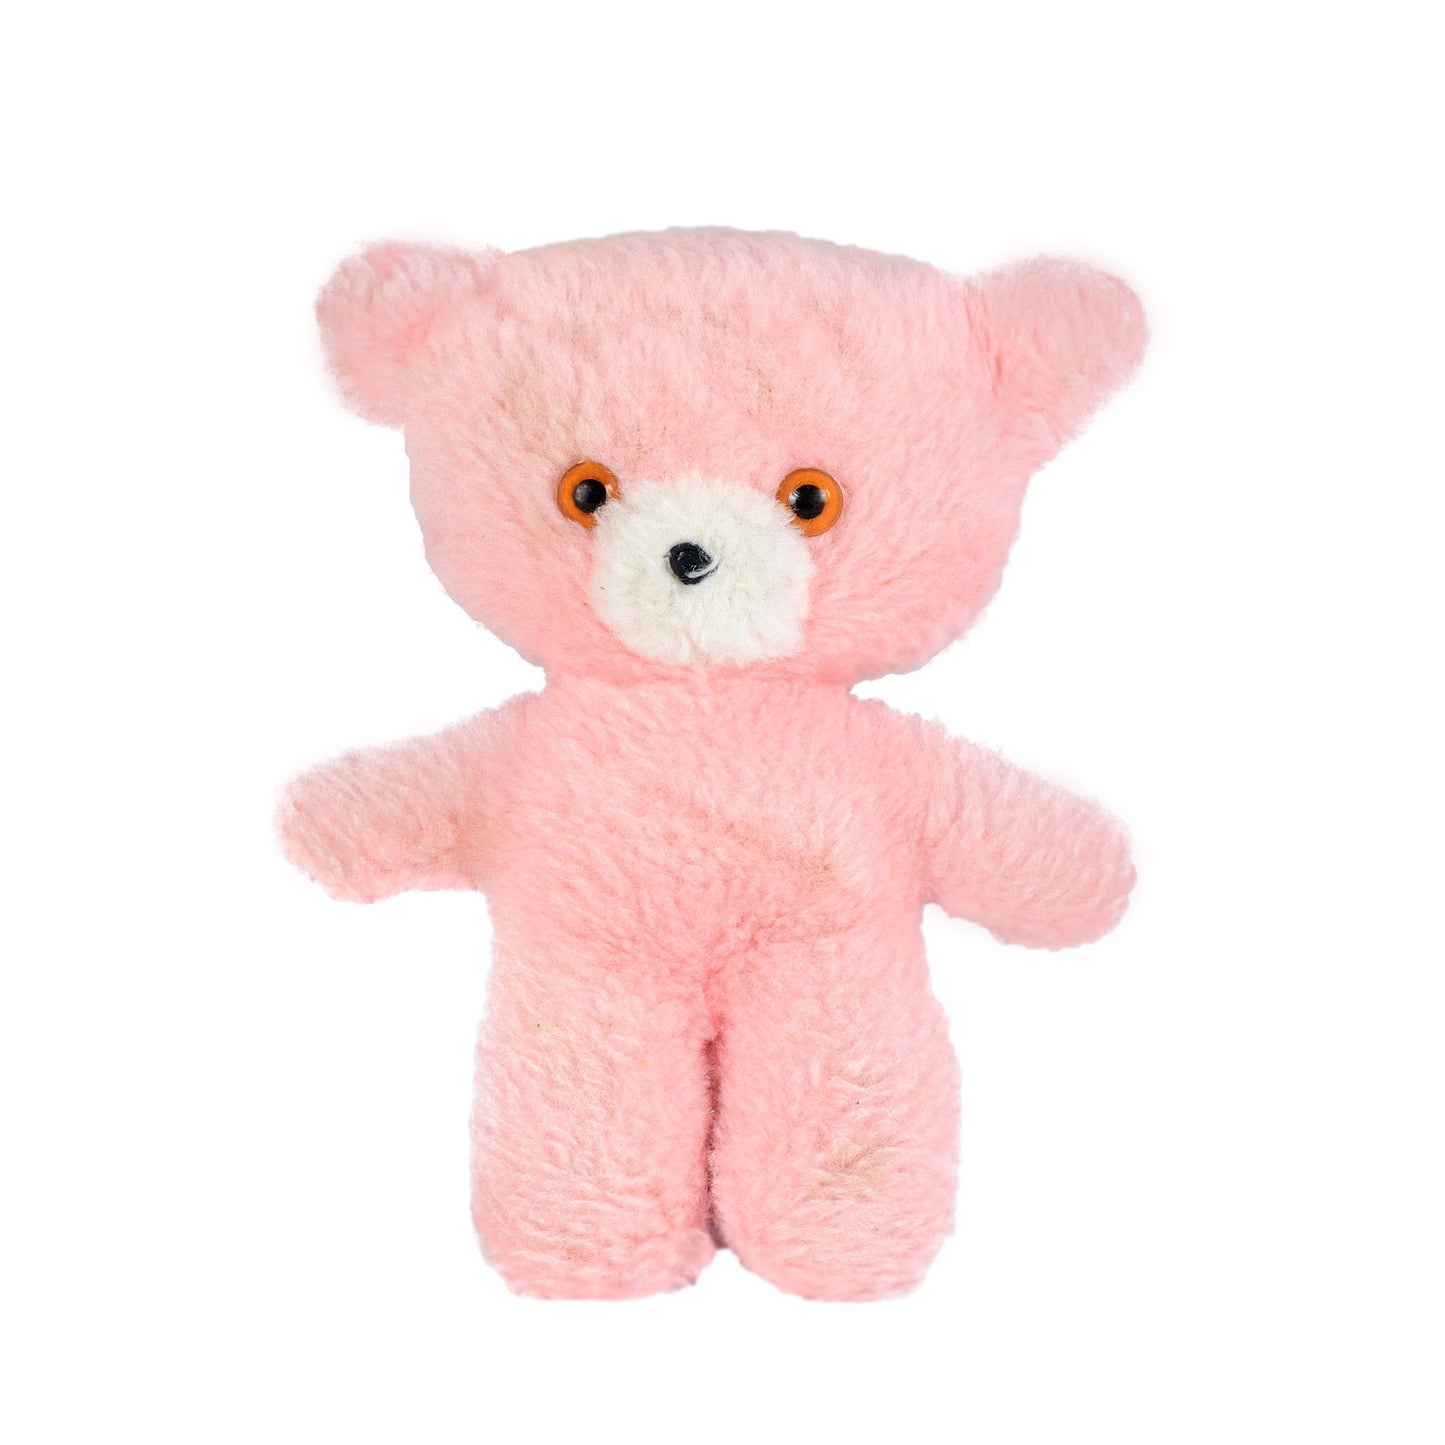 Candy pink teddy bear